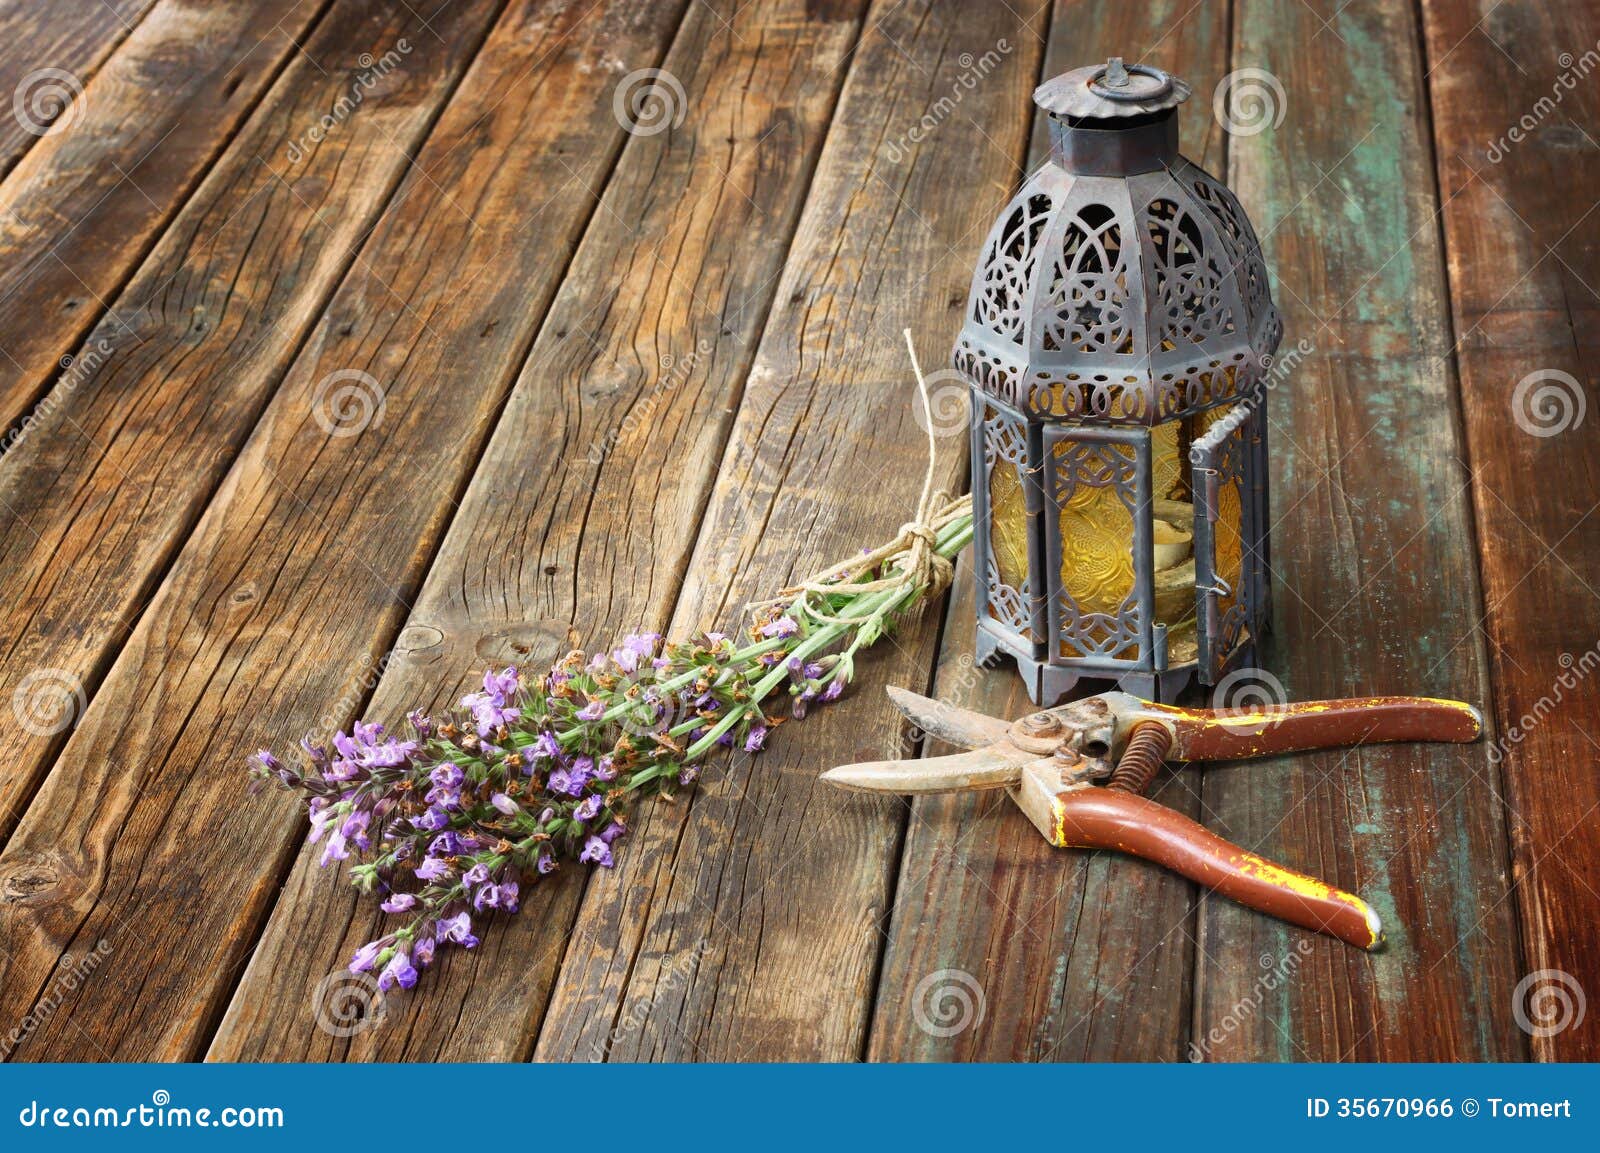 vintage oriental lamp, sage plant and garden scissors on